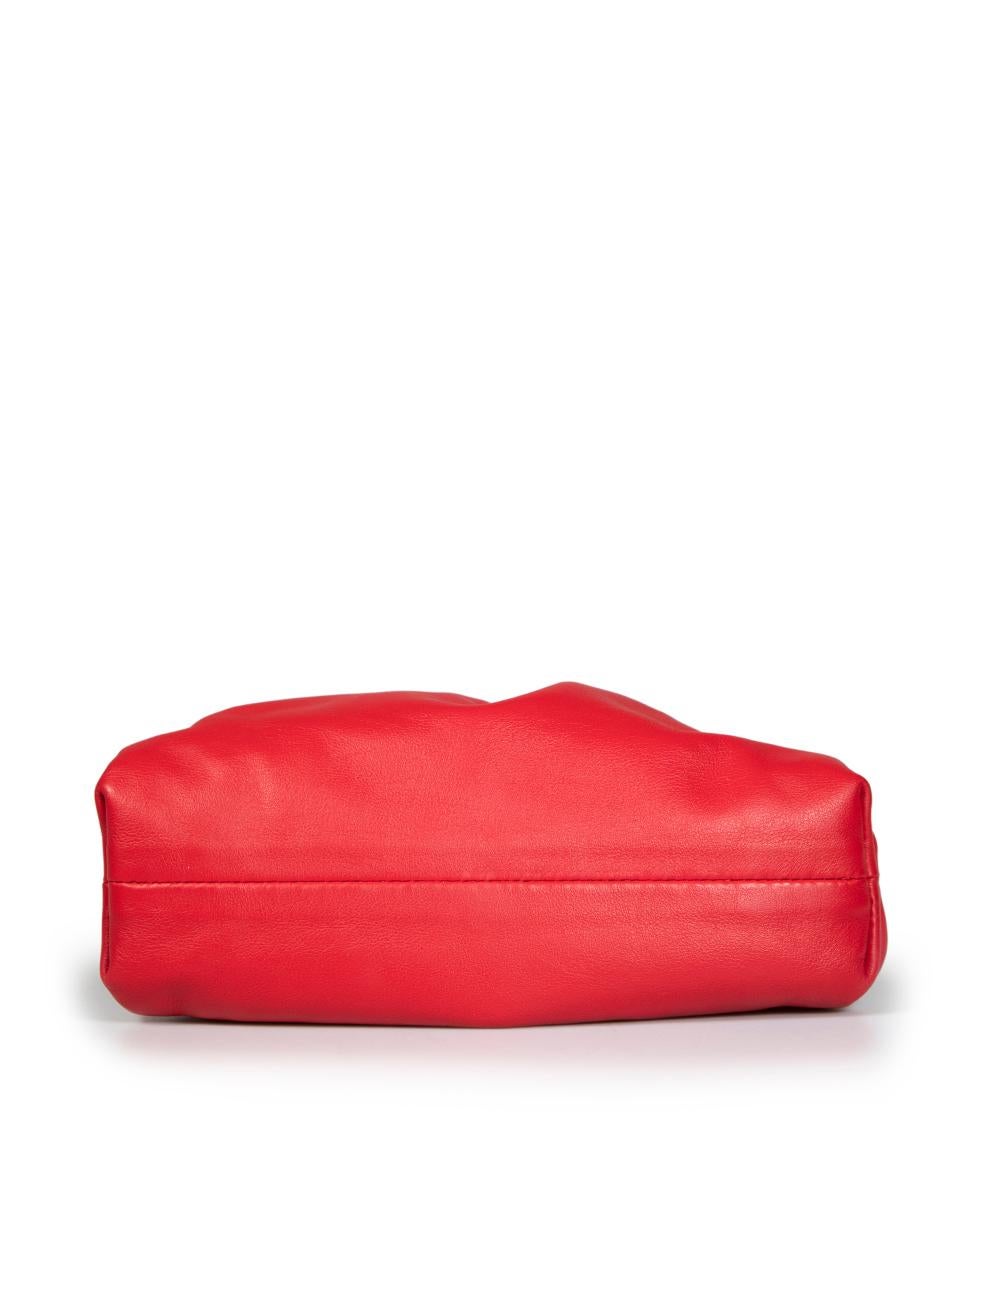 Women's Bottega Veneta Red Leather Mini Pouch For Sale